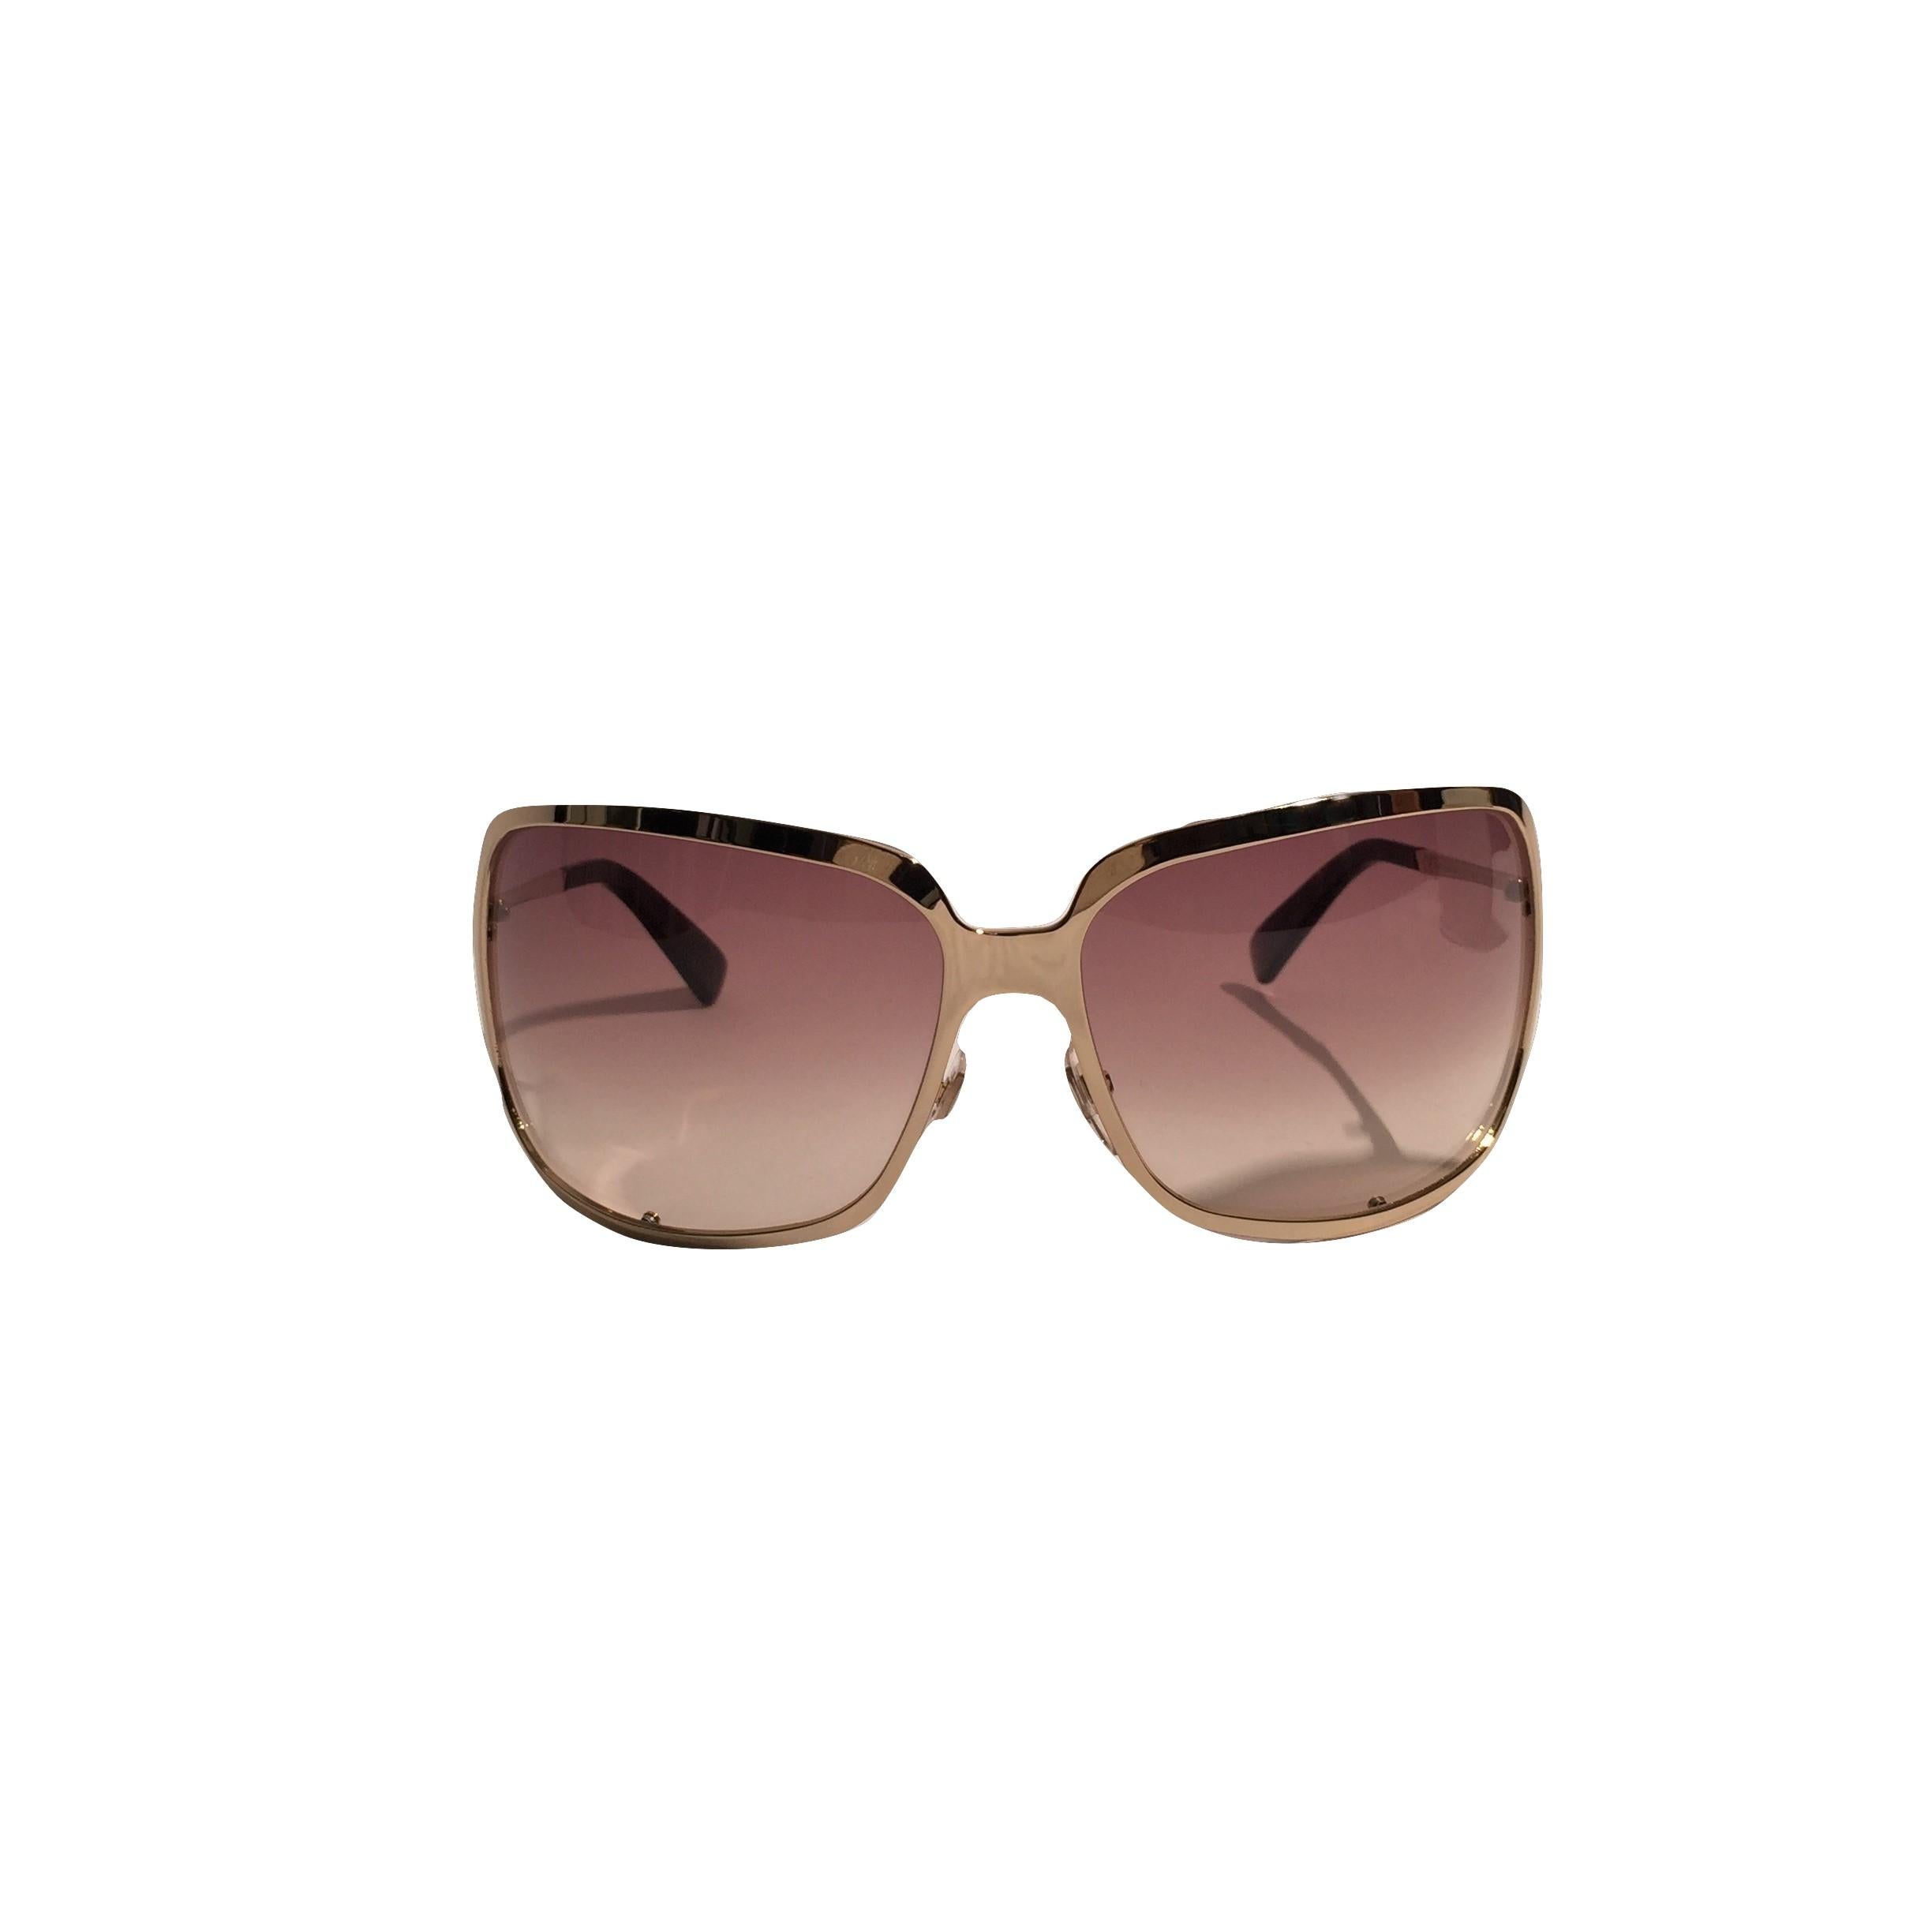 Yves Saint Laurent New YSL Gold Wrap Sunglasses  5